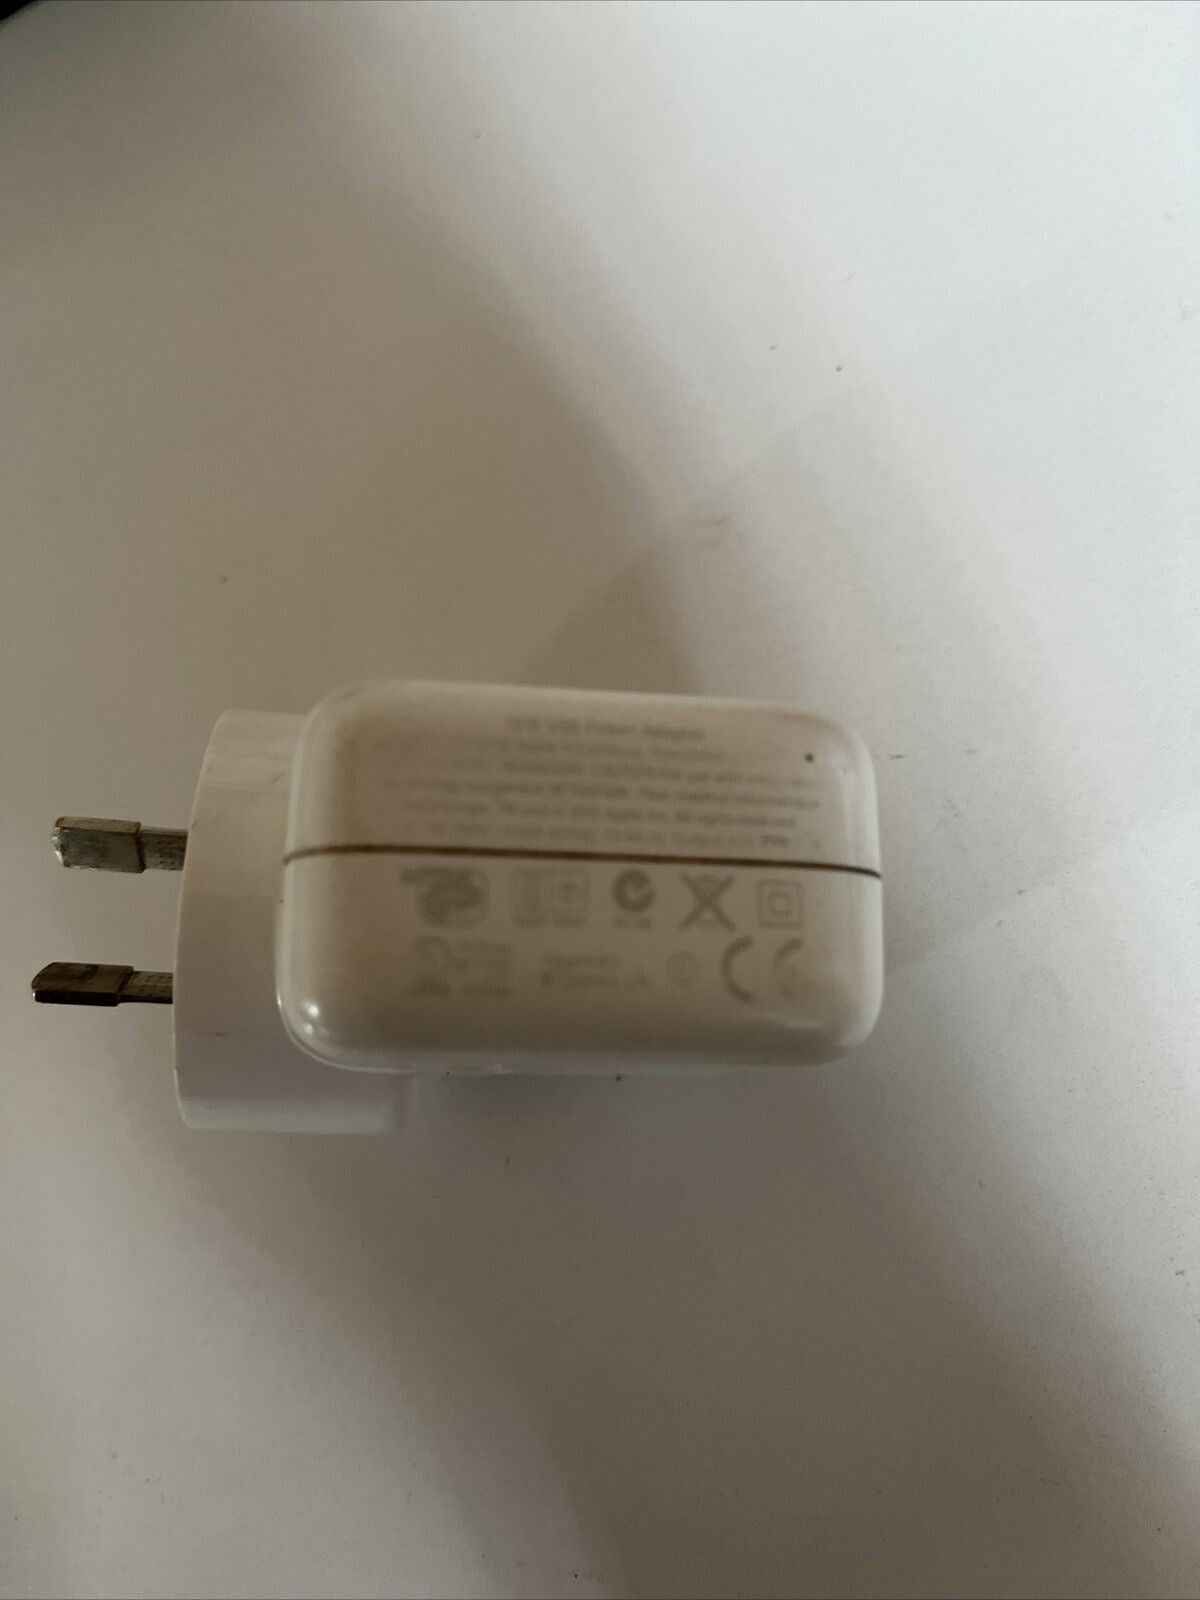 Genuine Apple 10W USB Power Adapter A1357